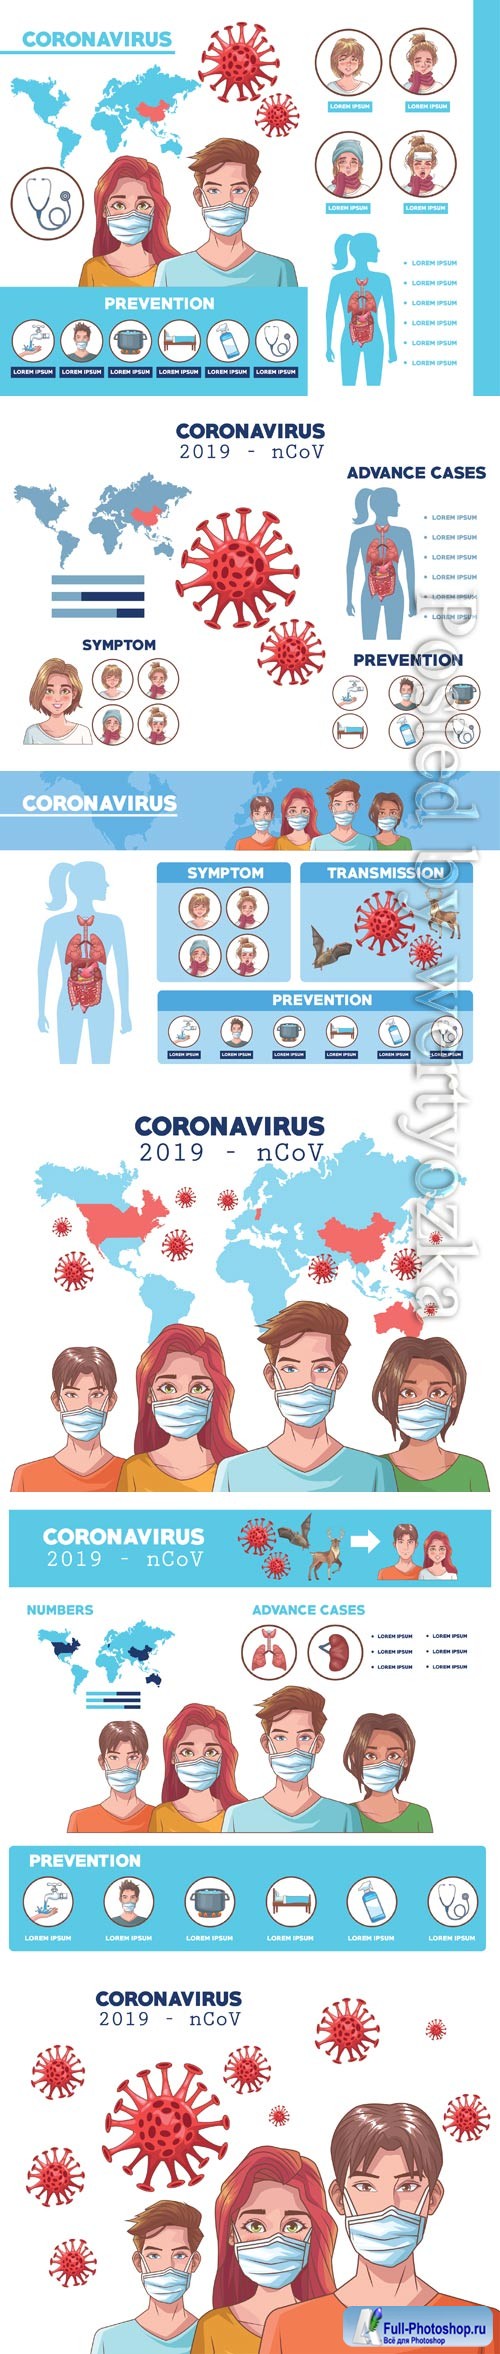 Coronavirus infographic with symptom and prevention